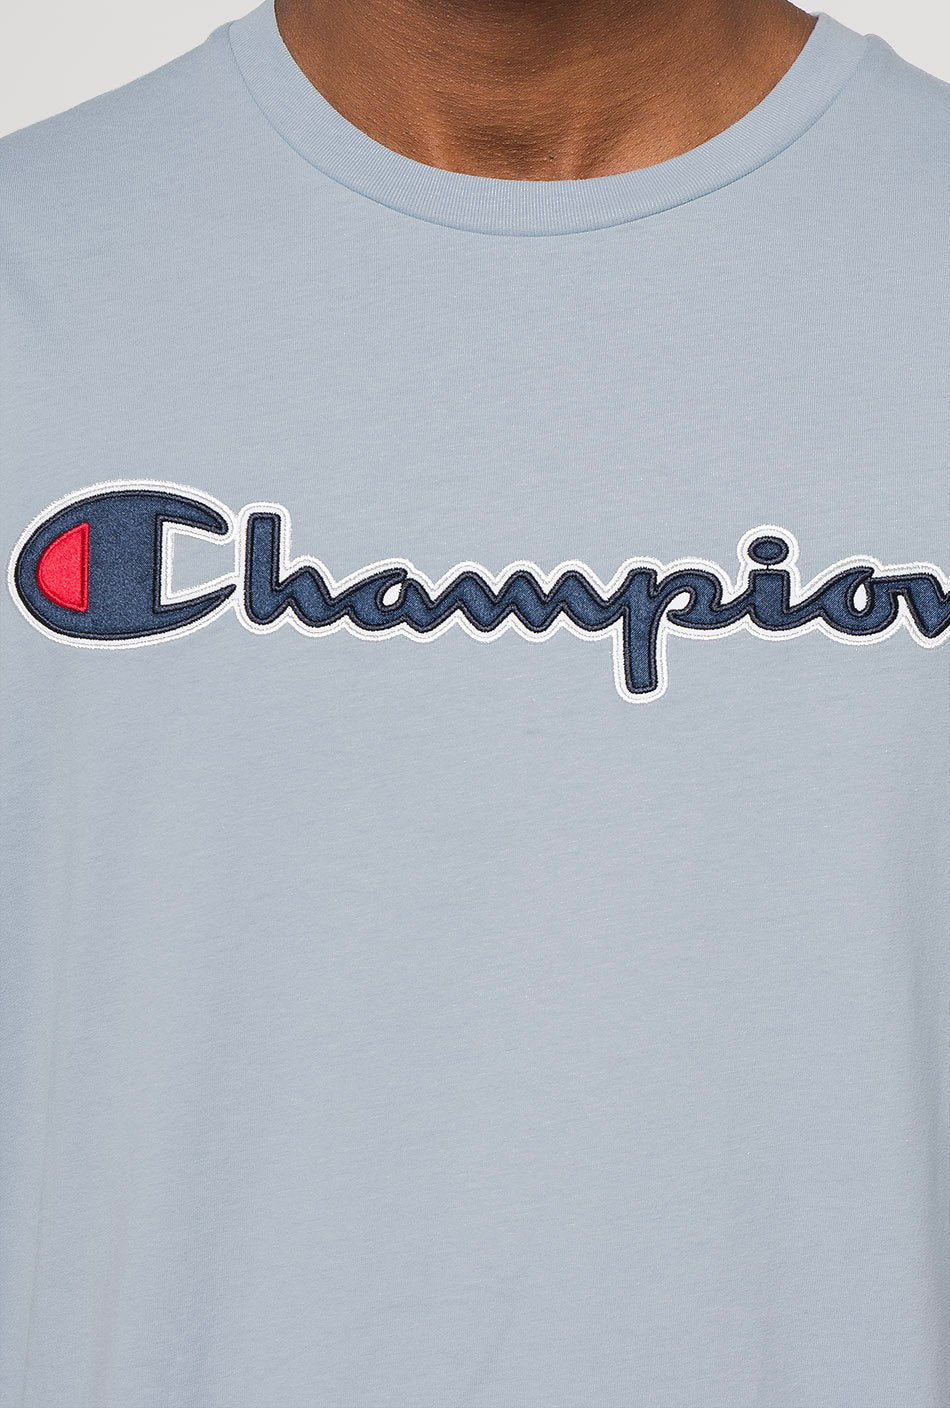 Champion Script Logo Crew Neck in Blau